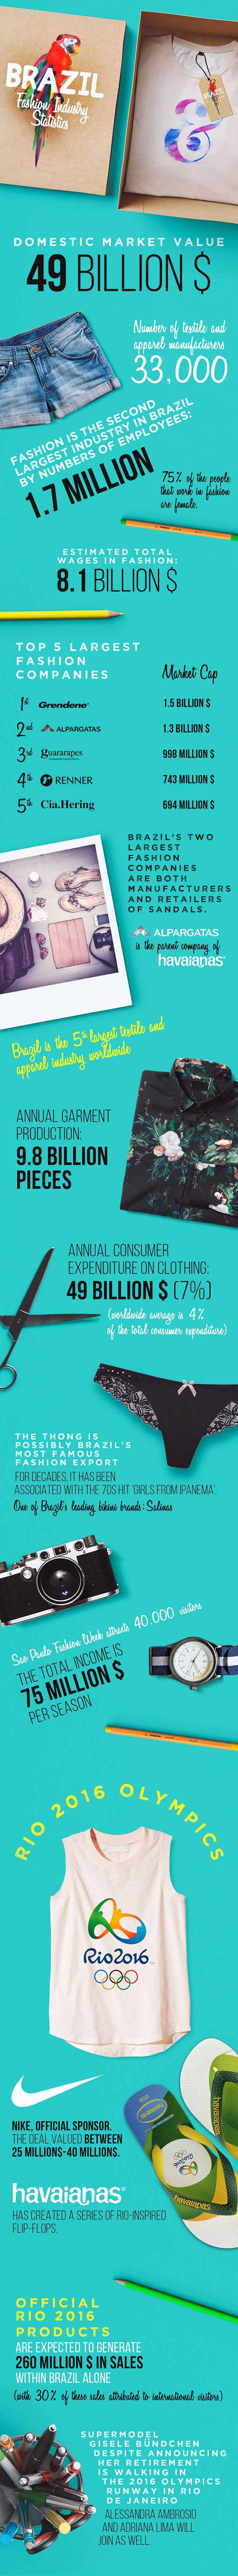 Estadísticas sobre la industria de la moda – Serie de infografías. Parte 3: Brasil